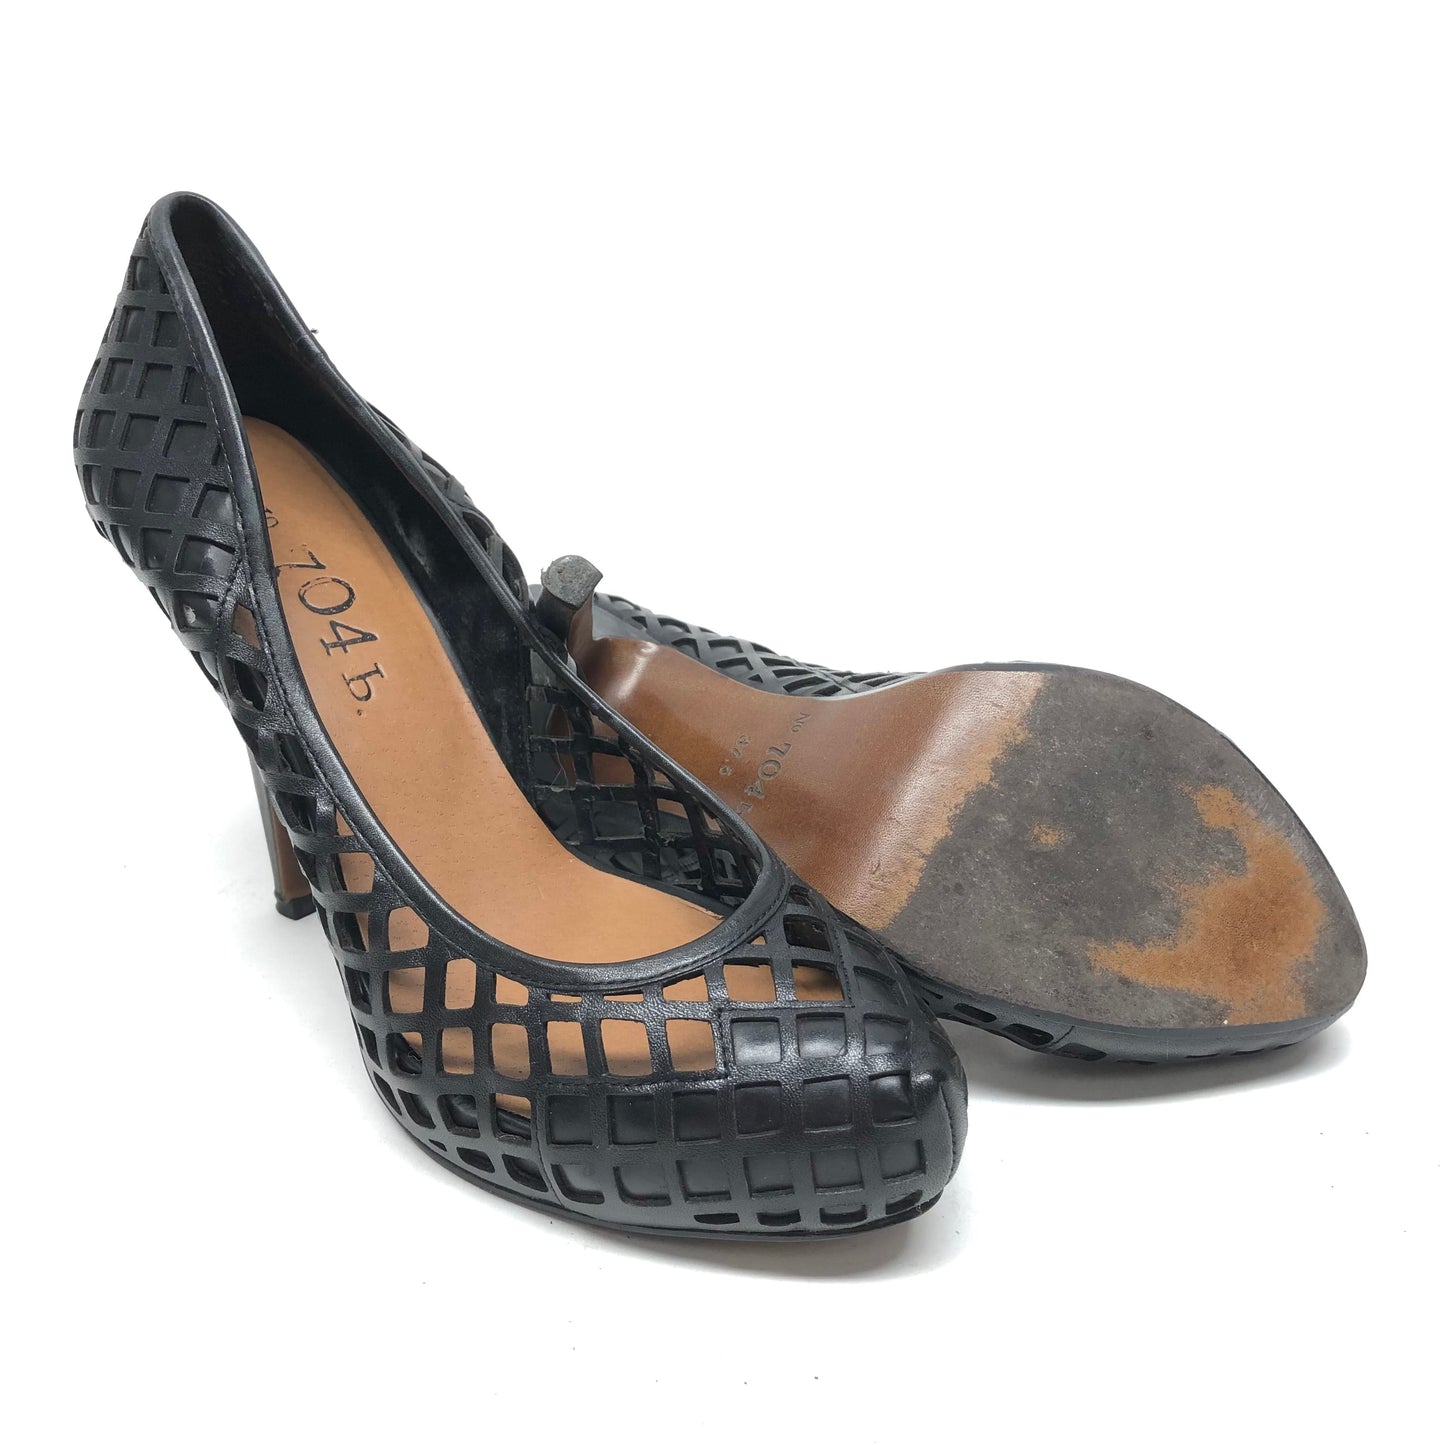 Black Shoes Heels Stiletto Clothes Mentor, Size 7